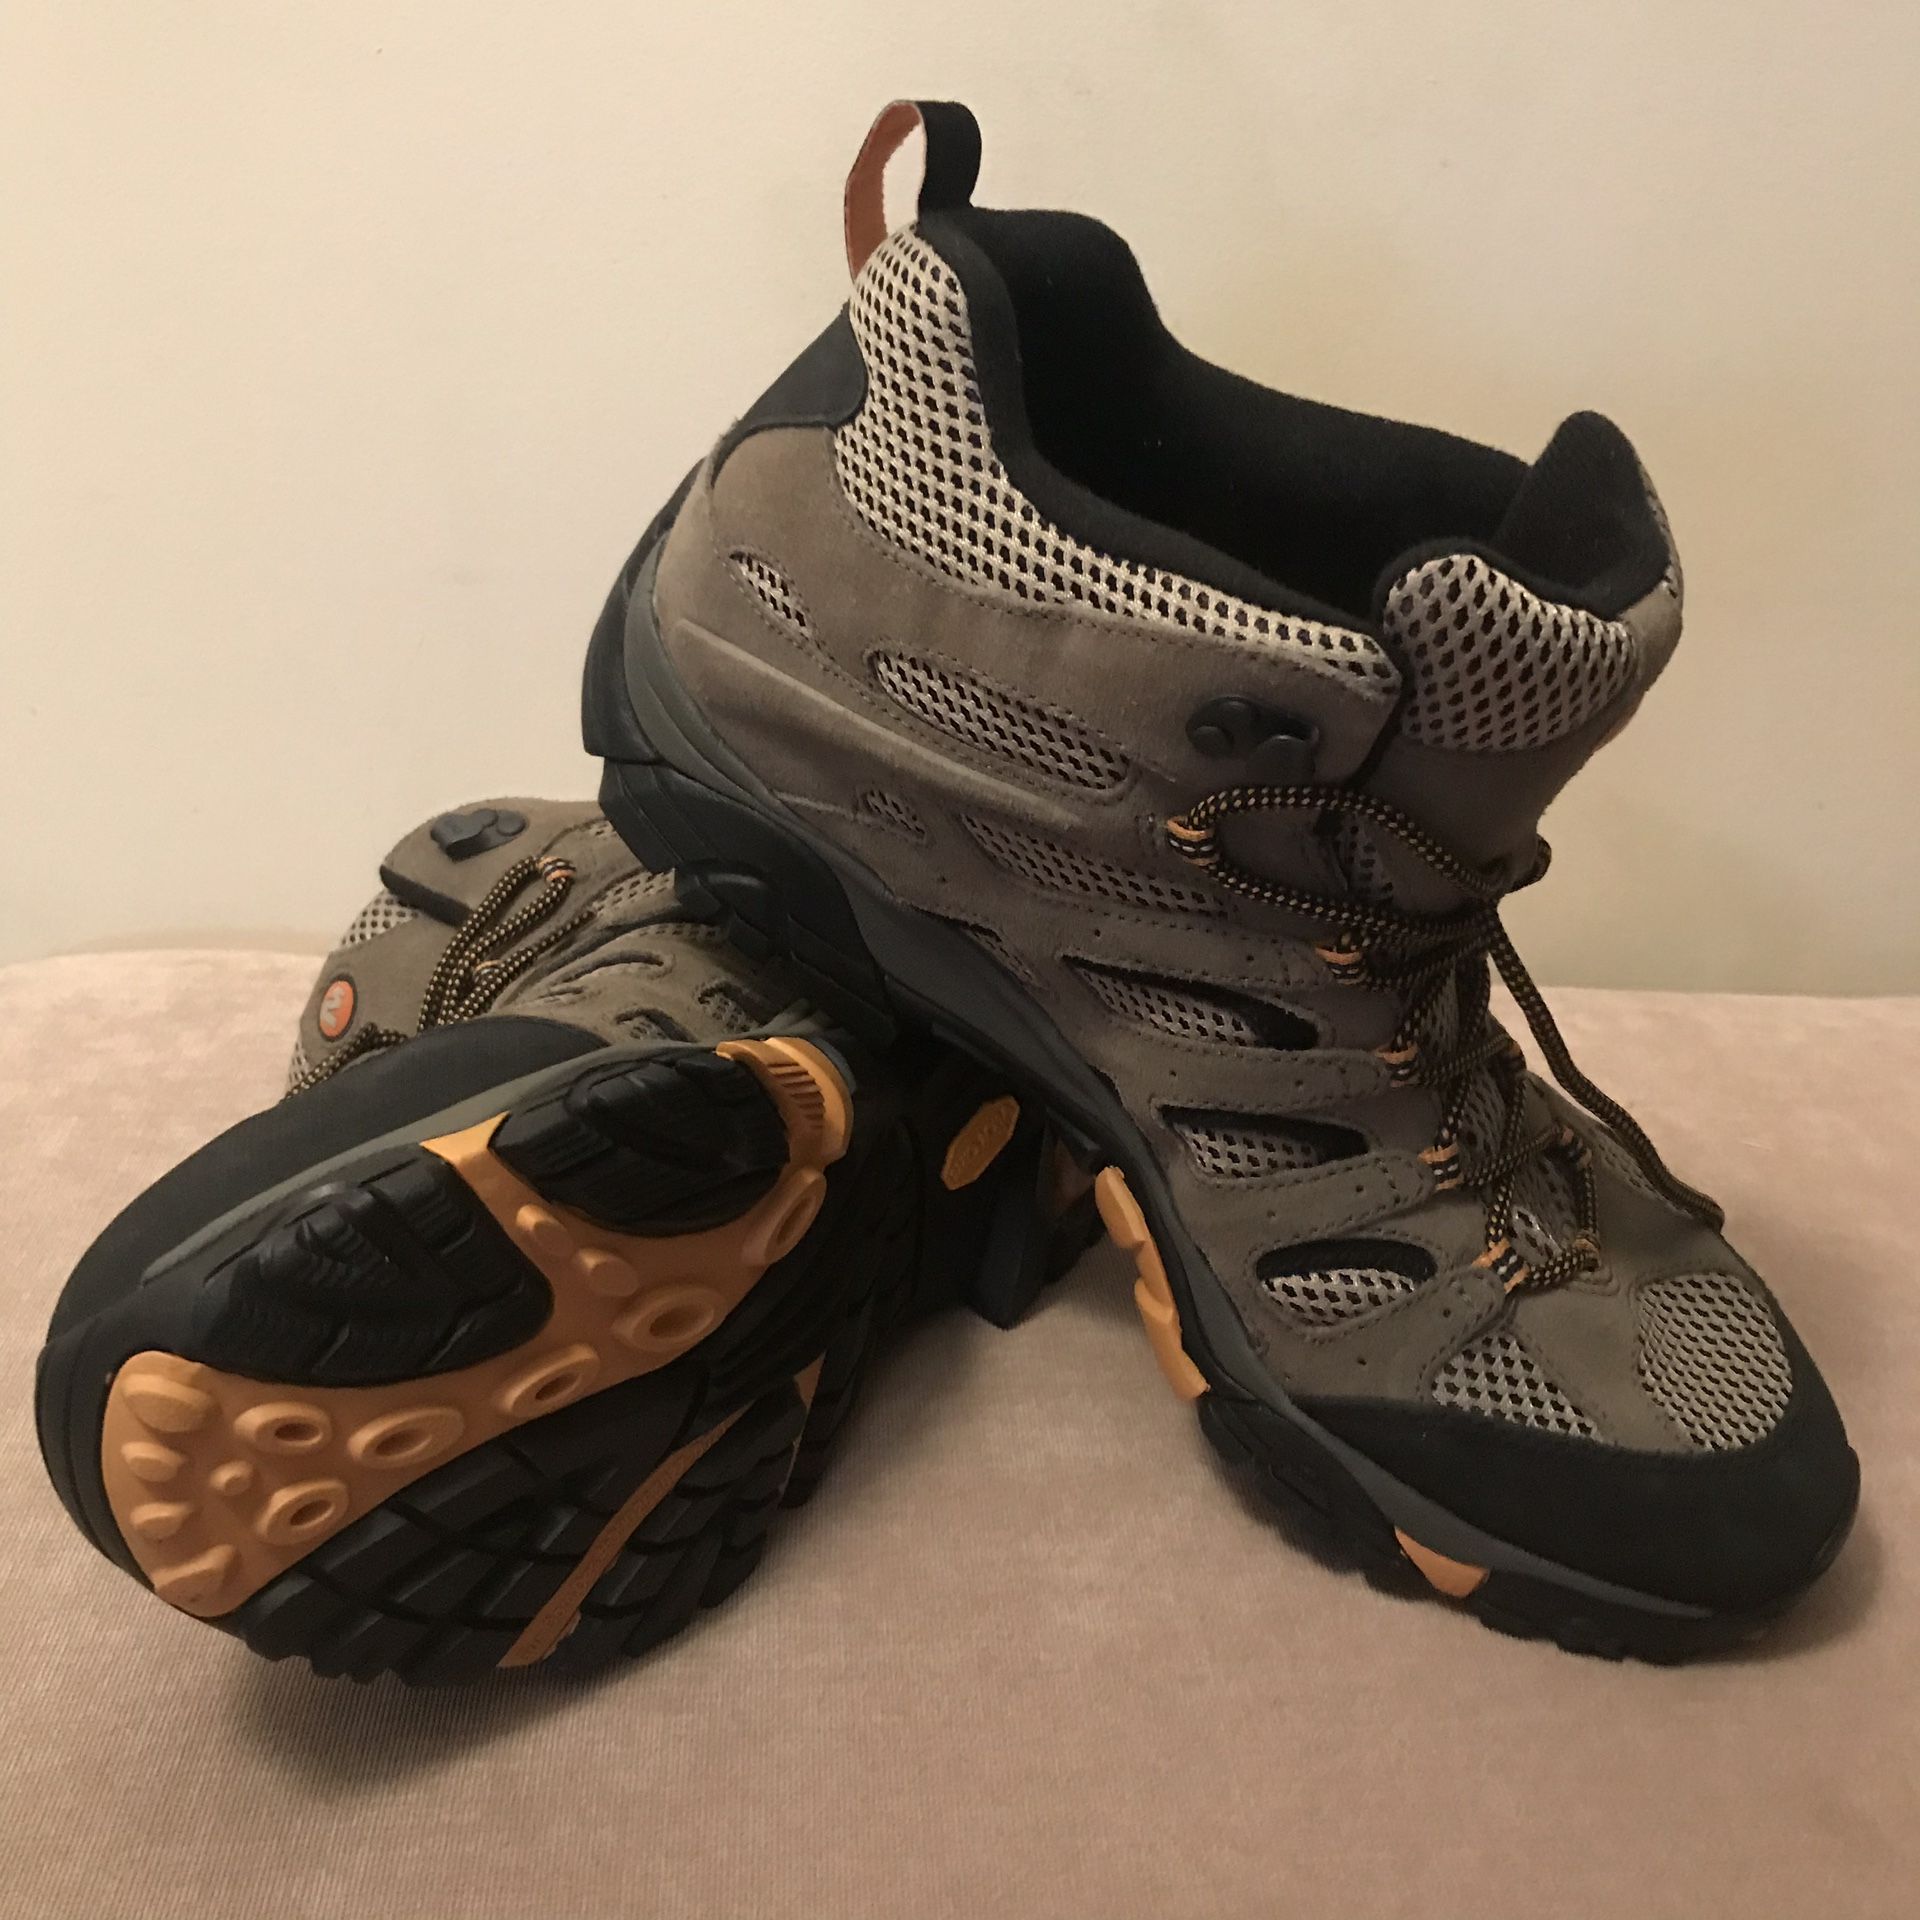 New Merrell Men's Moab Ventilator Mid Hiking Boots shoes Walnut Size 13 J86593